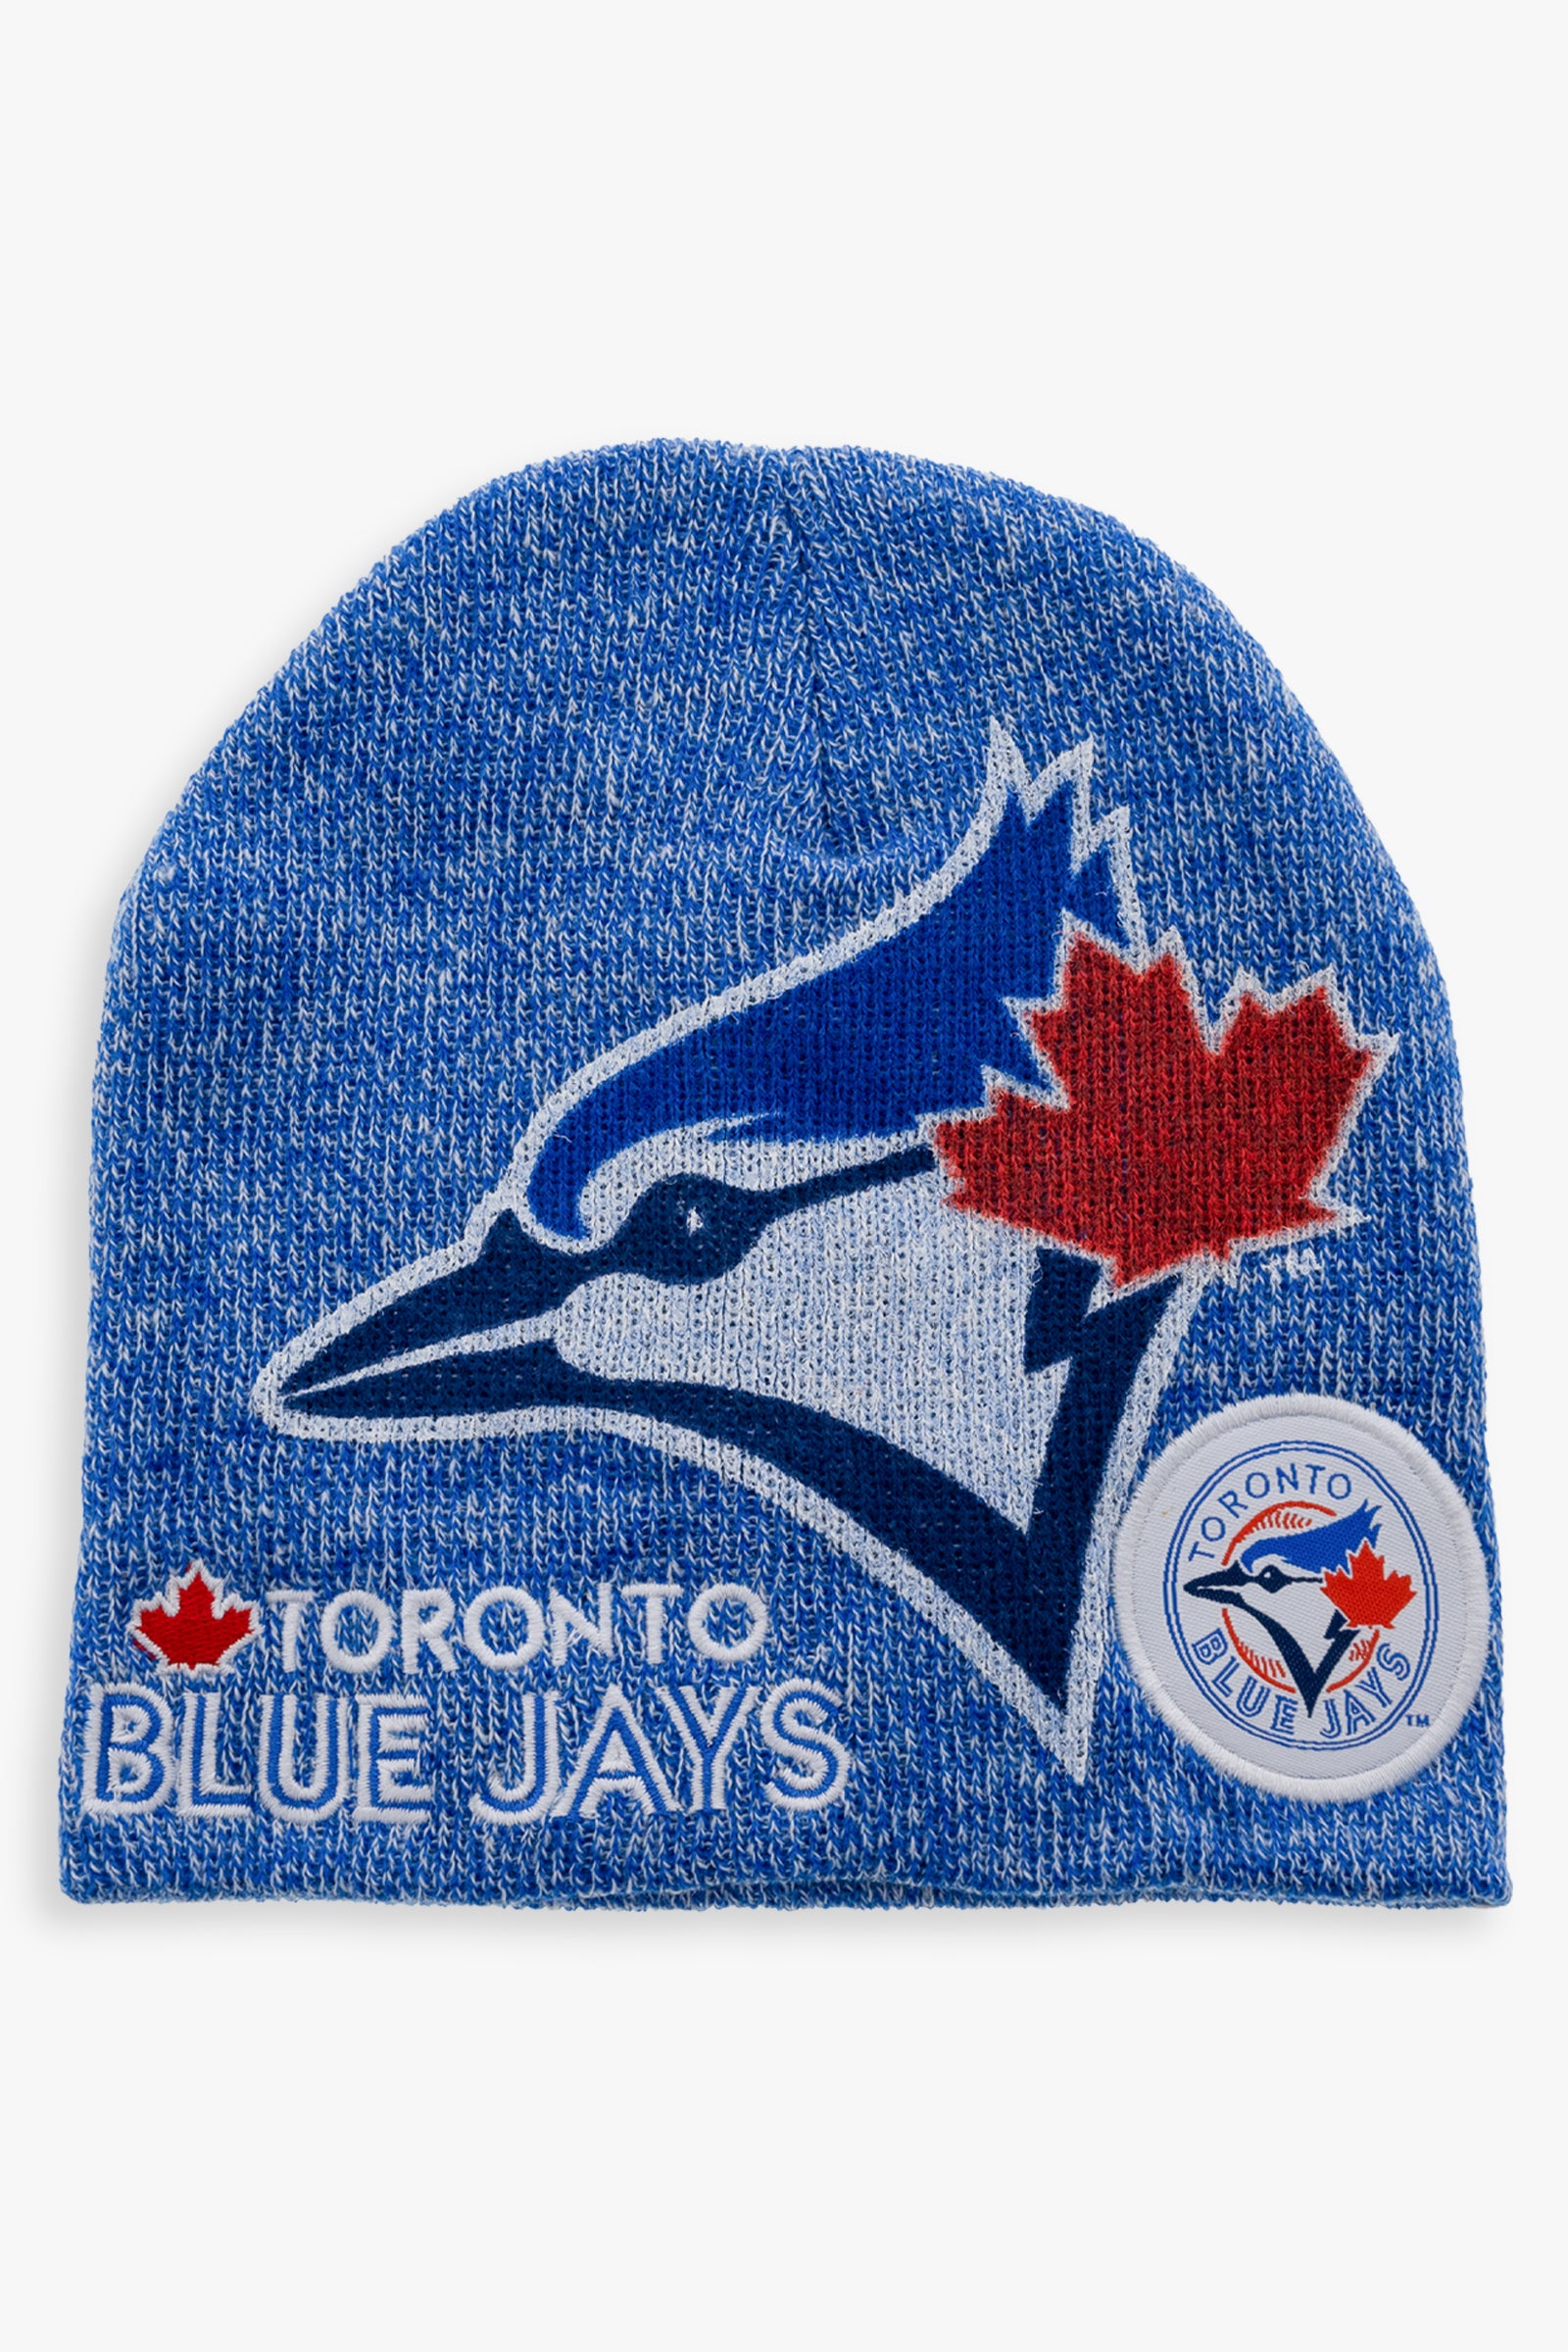 Gertex Toronto Blue Jays Youth Boys Winter Hat and Glove Set